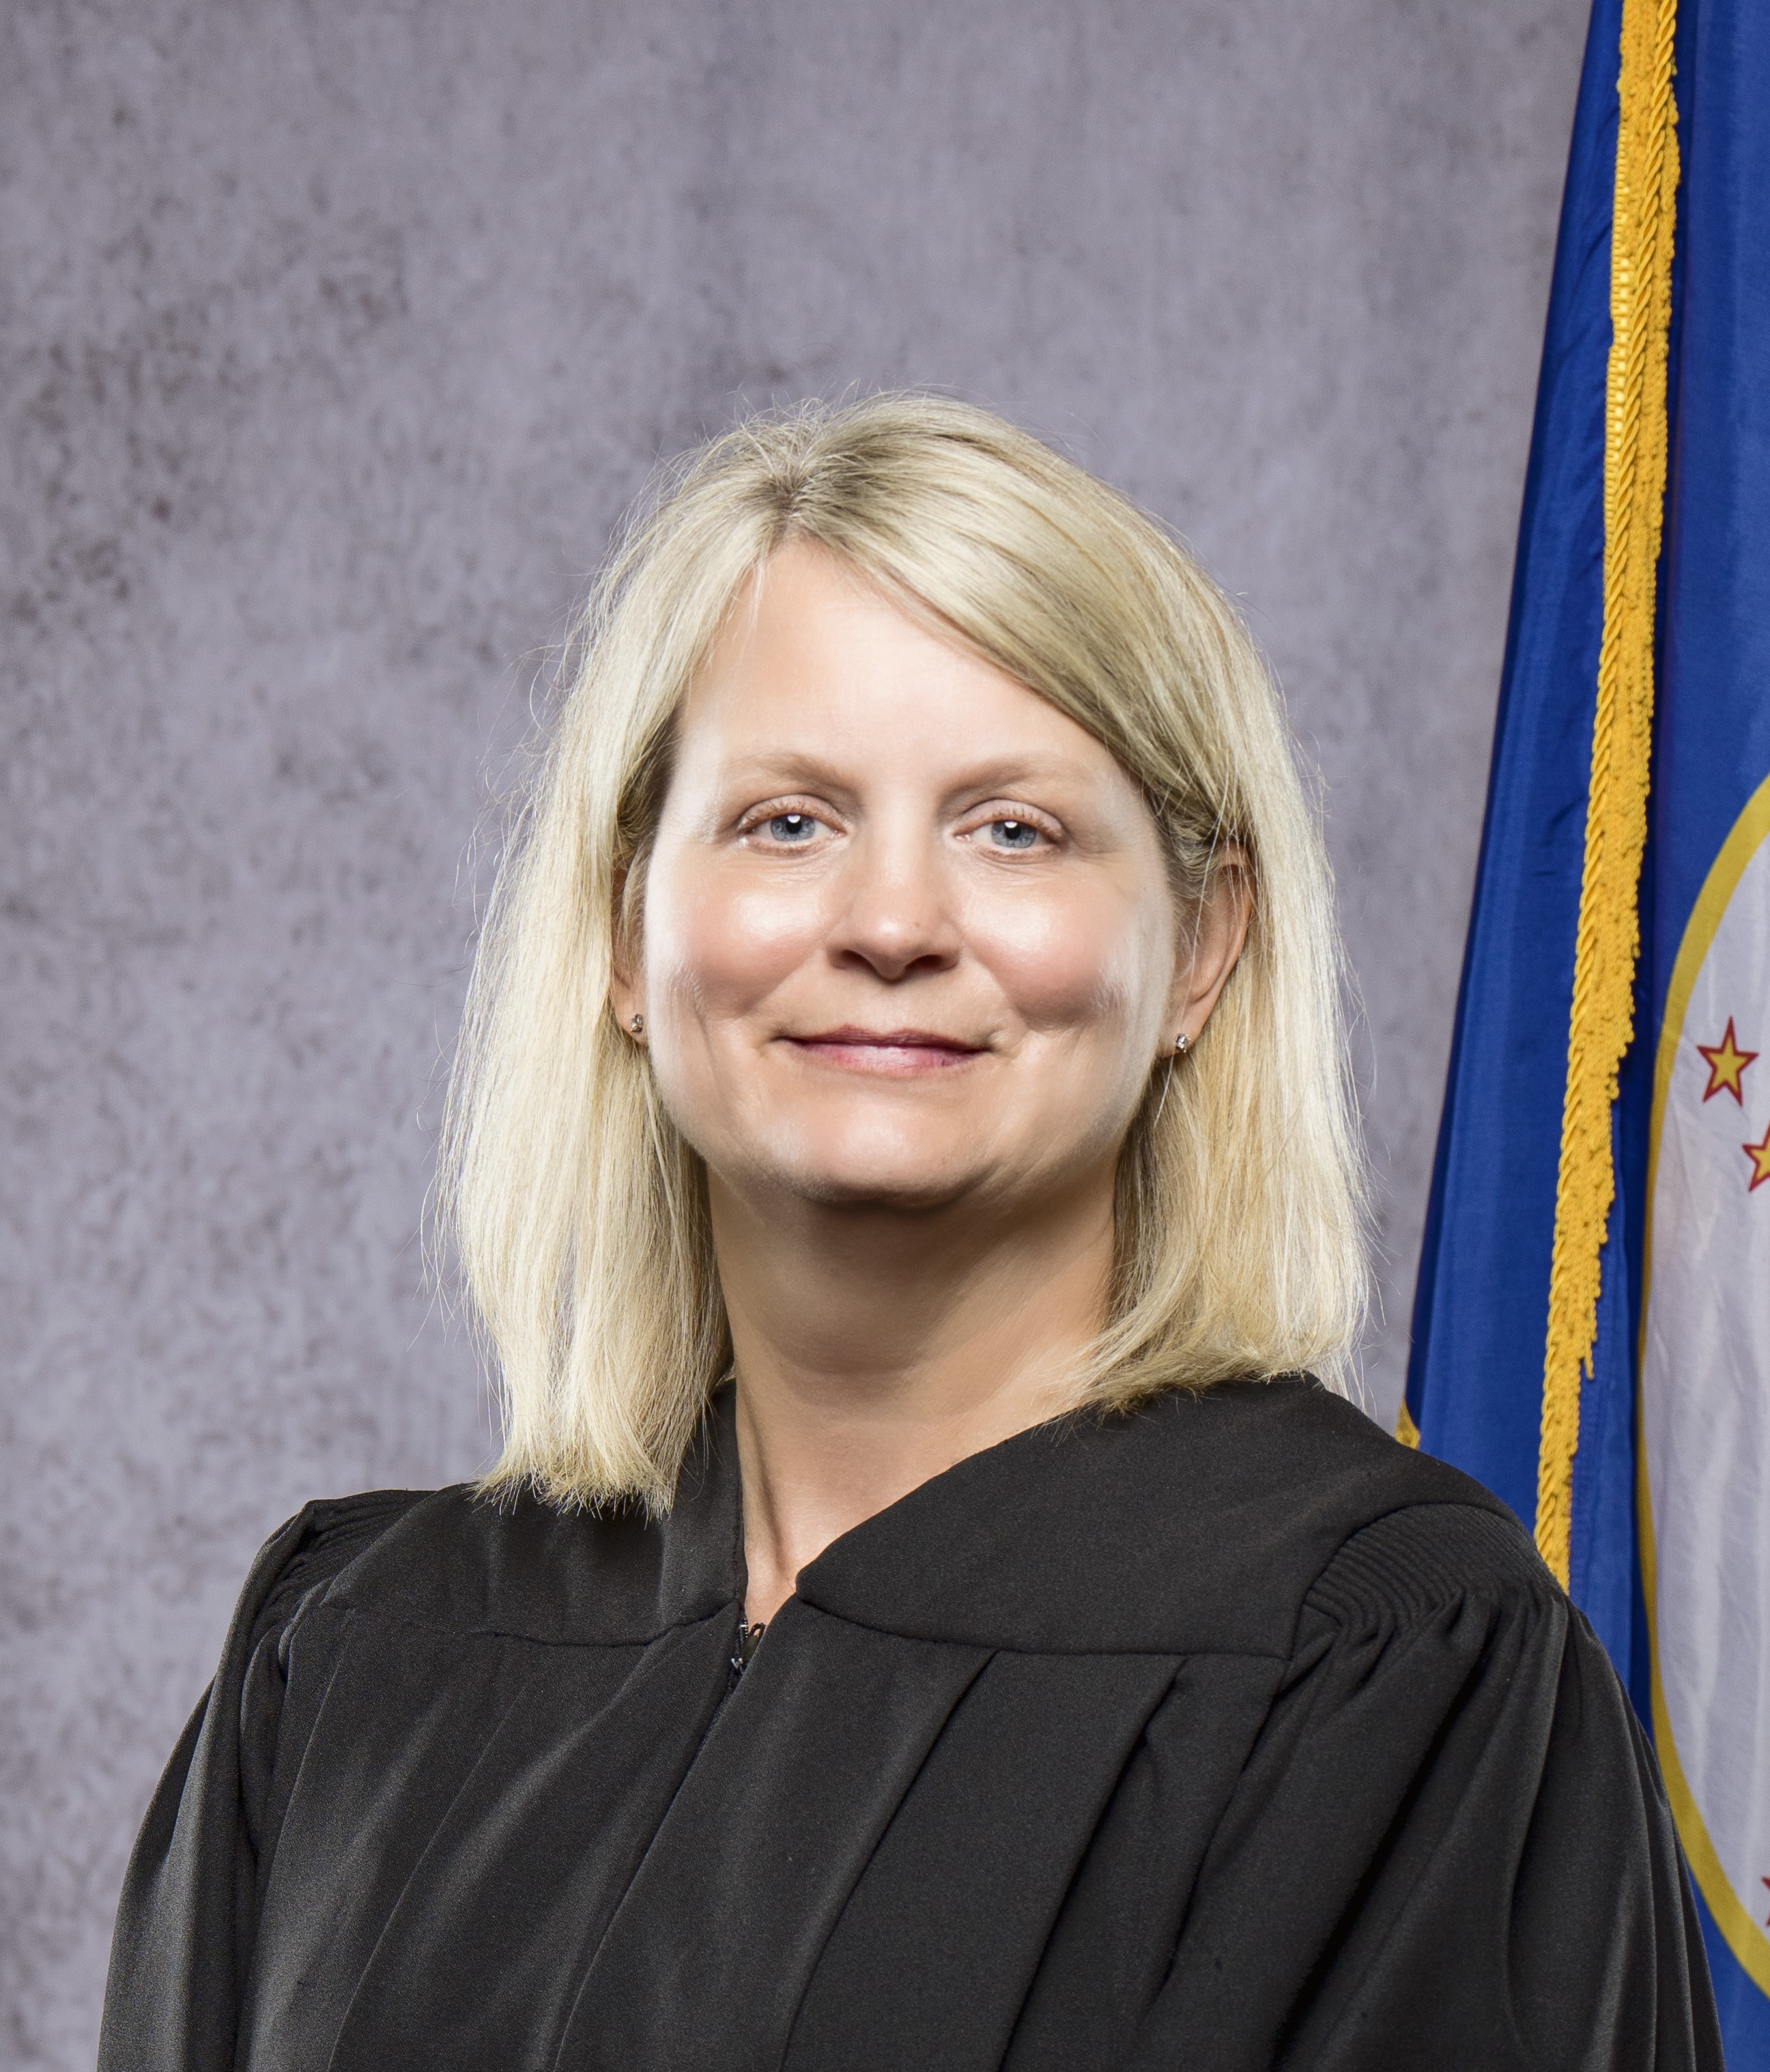 Judge Heidi M. Chandler